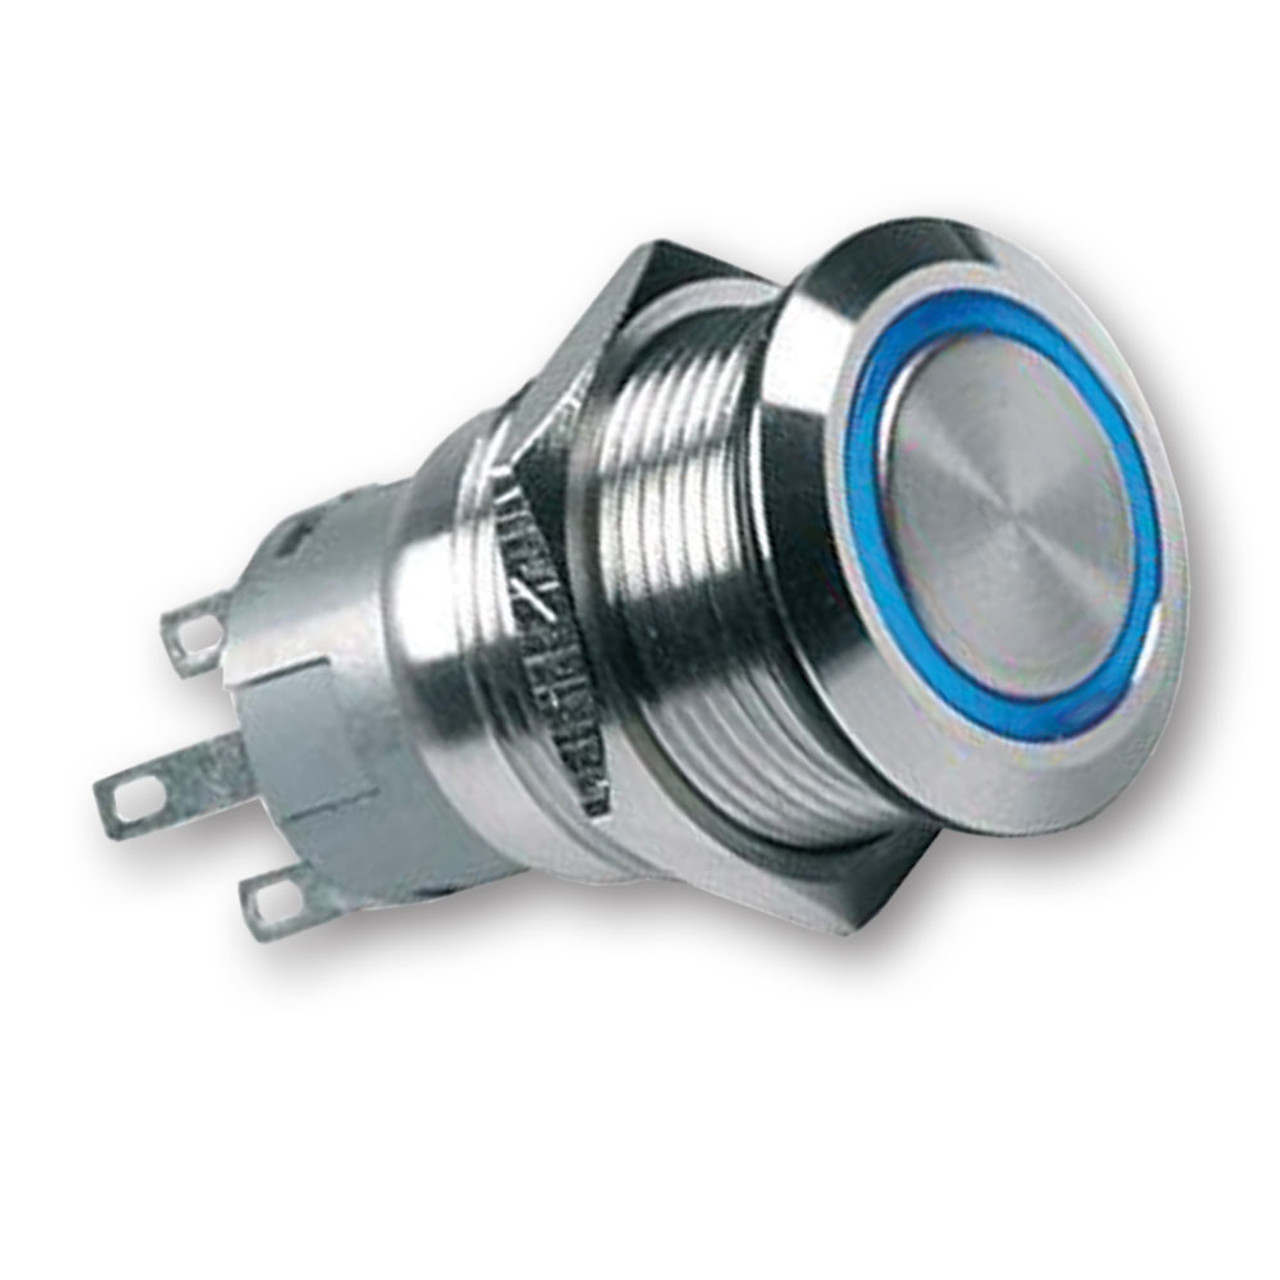 Mega LED - Push Button - Waterproof IP67, Stainless Steel, Latching Illuminated, 24V, Blue, Green LED (32358-G24Li) - Apollo Lighting